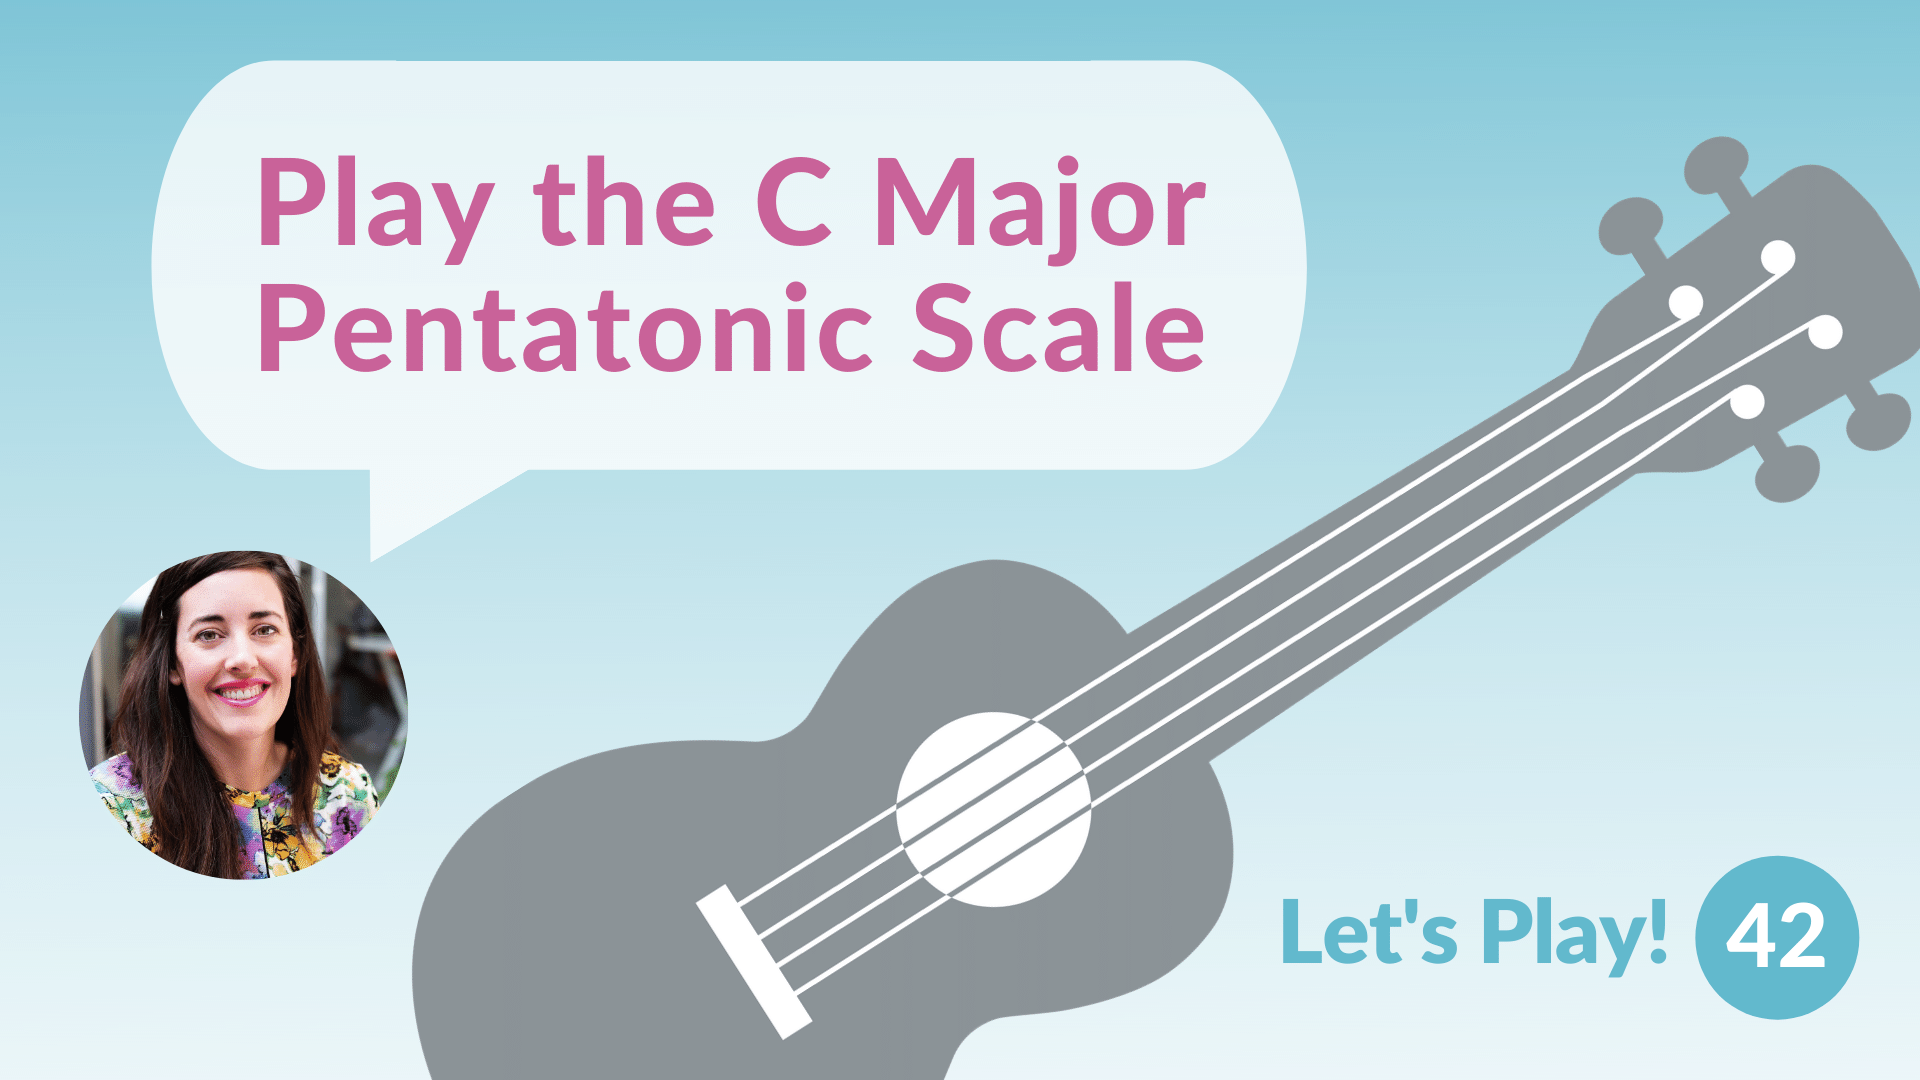 The C Major Pentatonic Scale